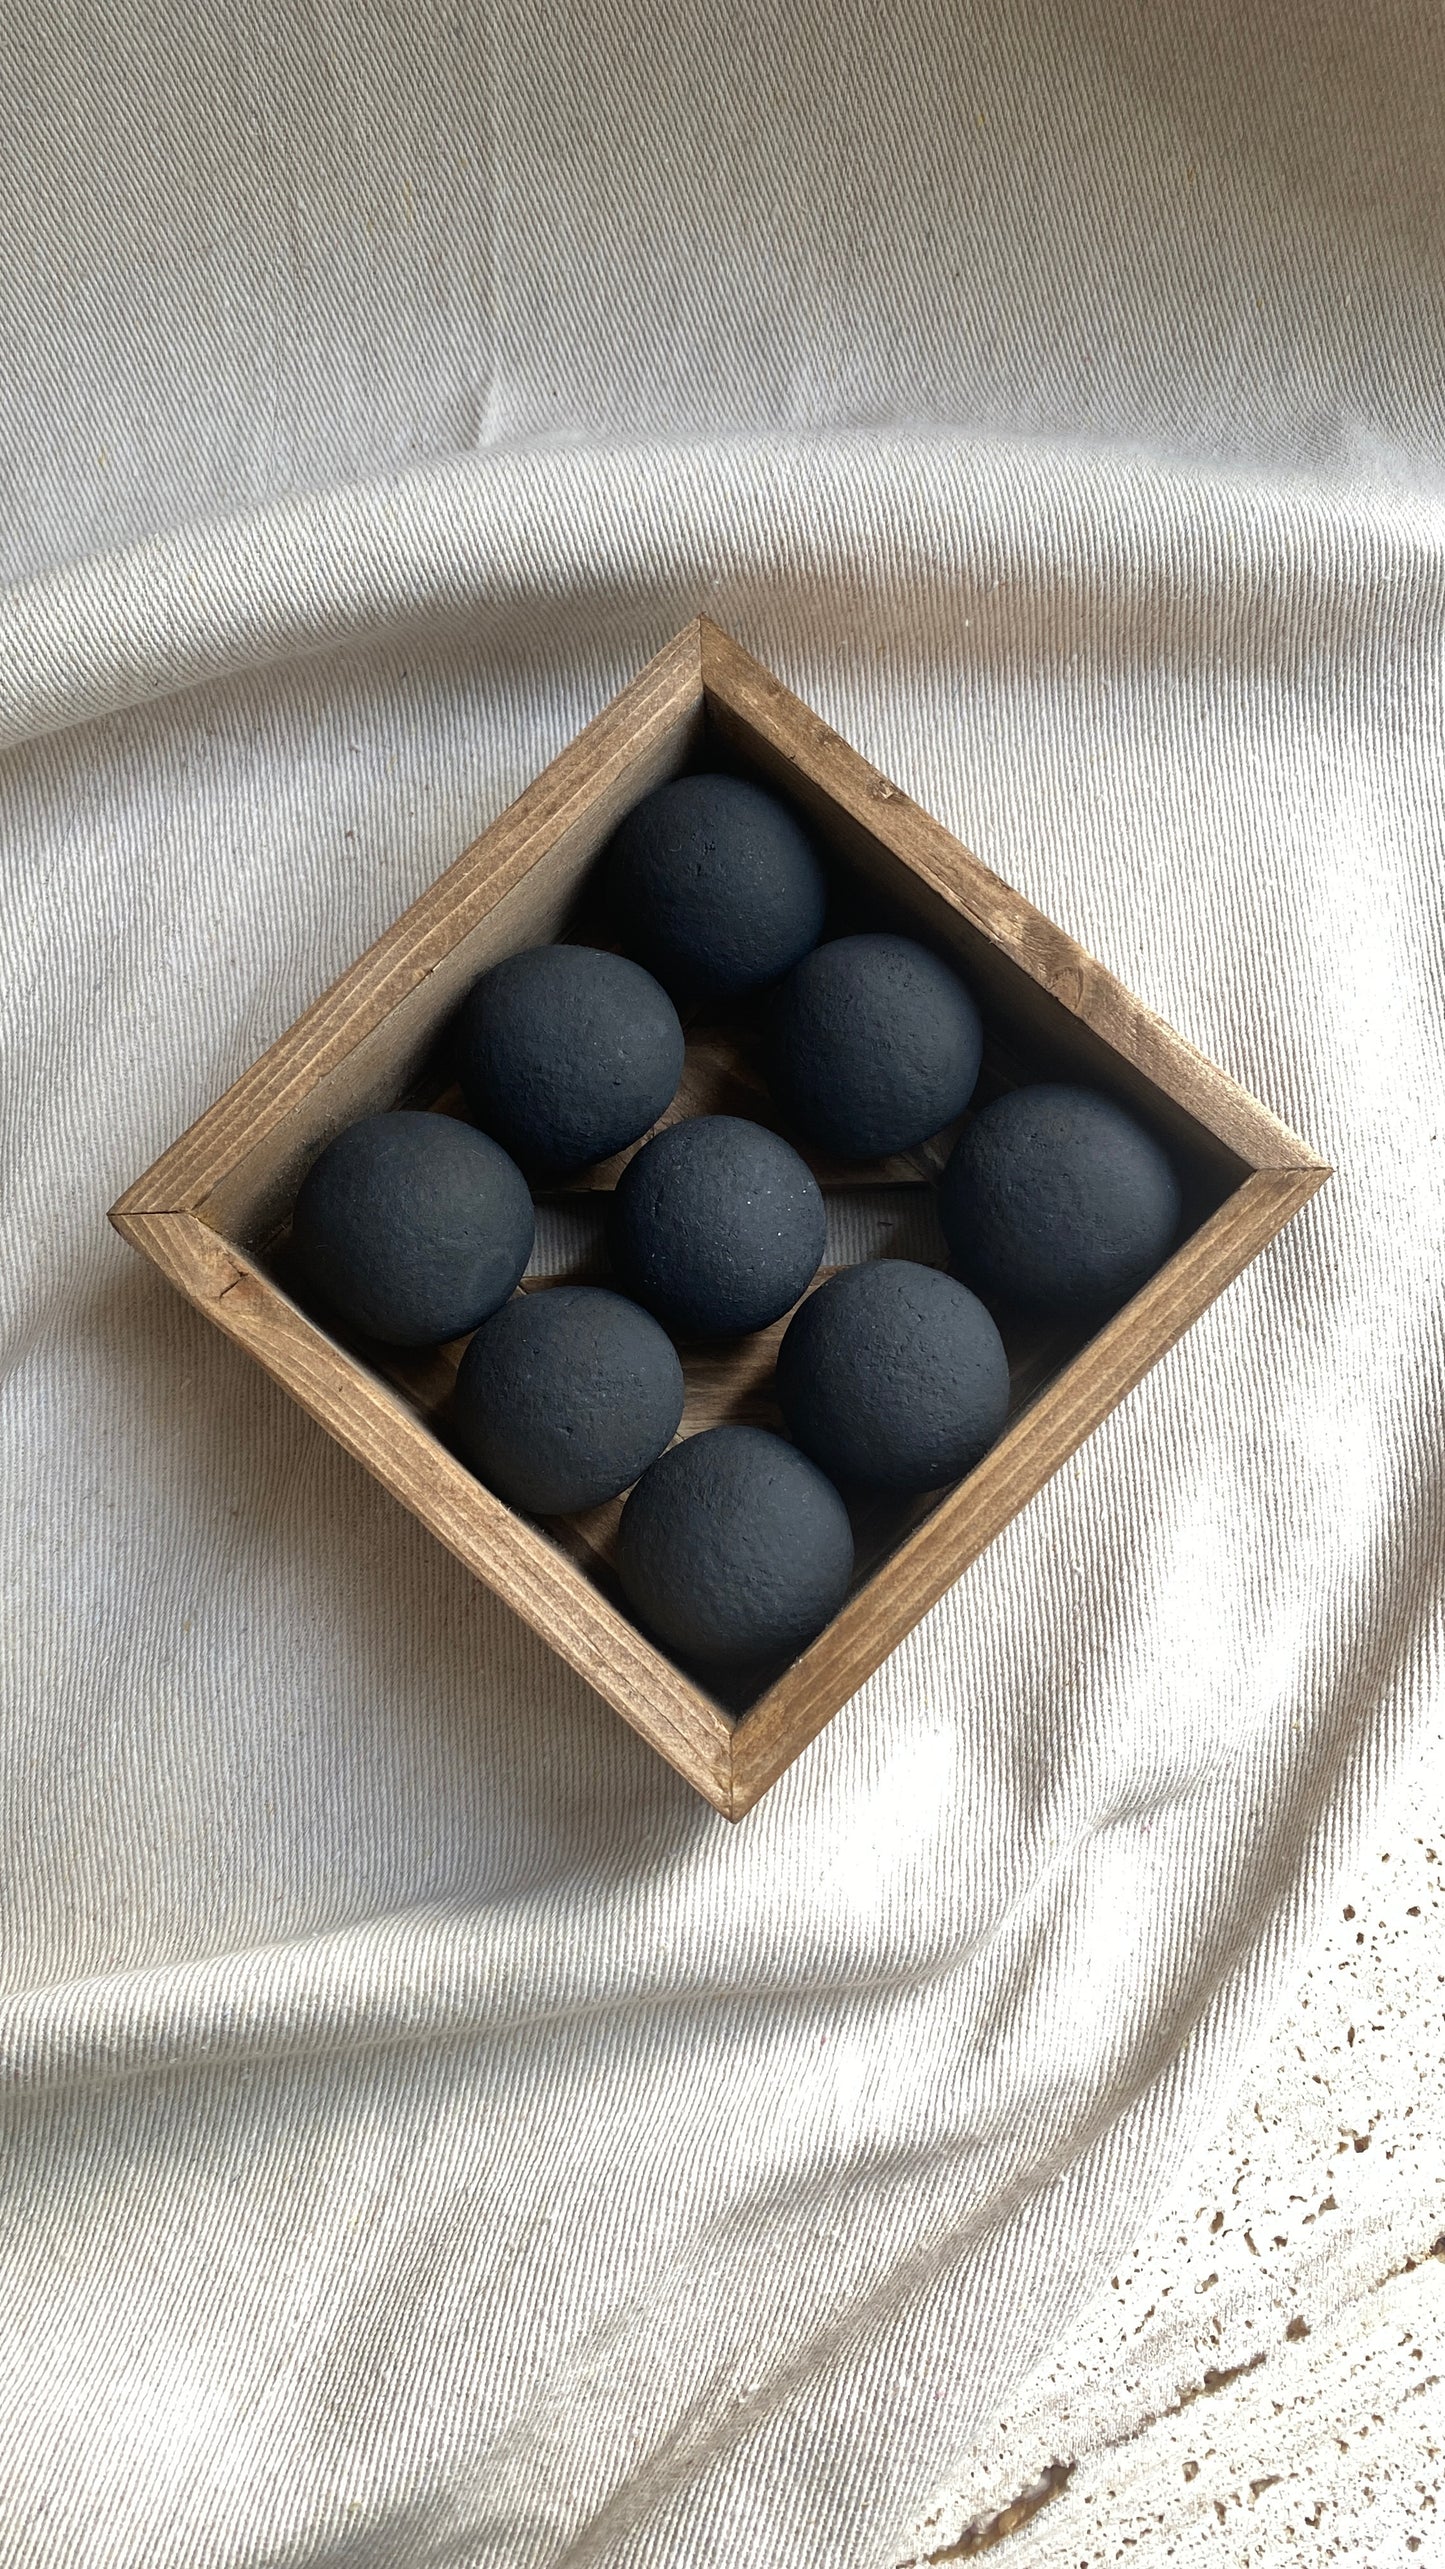 ARÖMA - concrete essential oils diffuser | handmade wood box